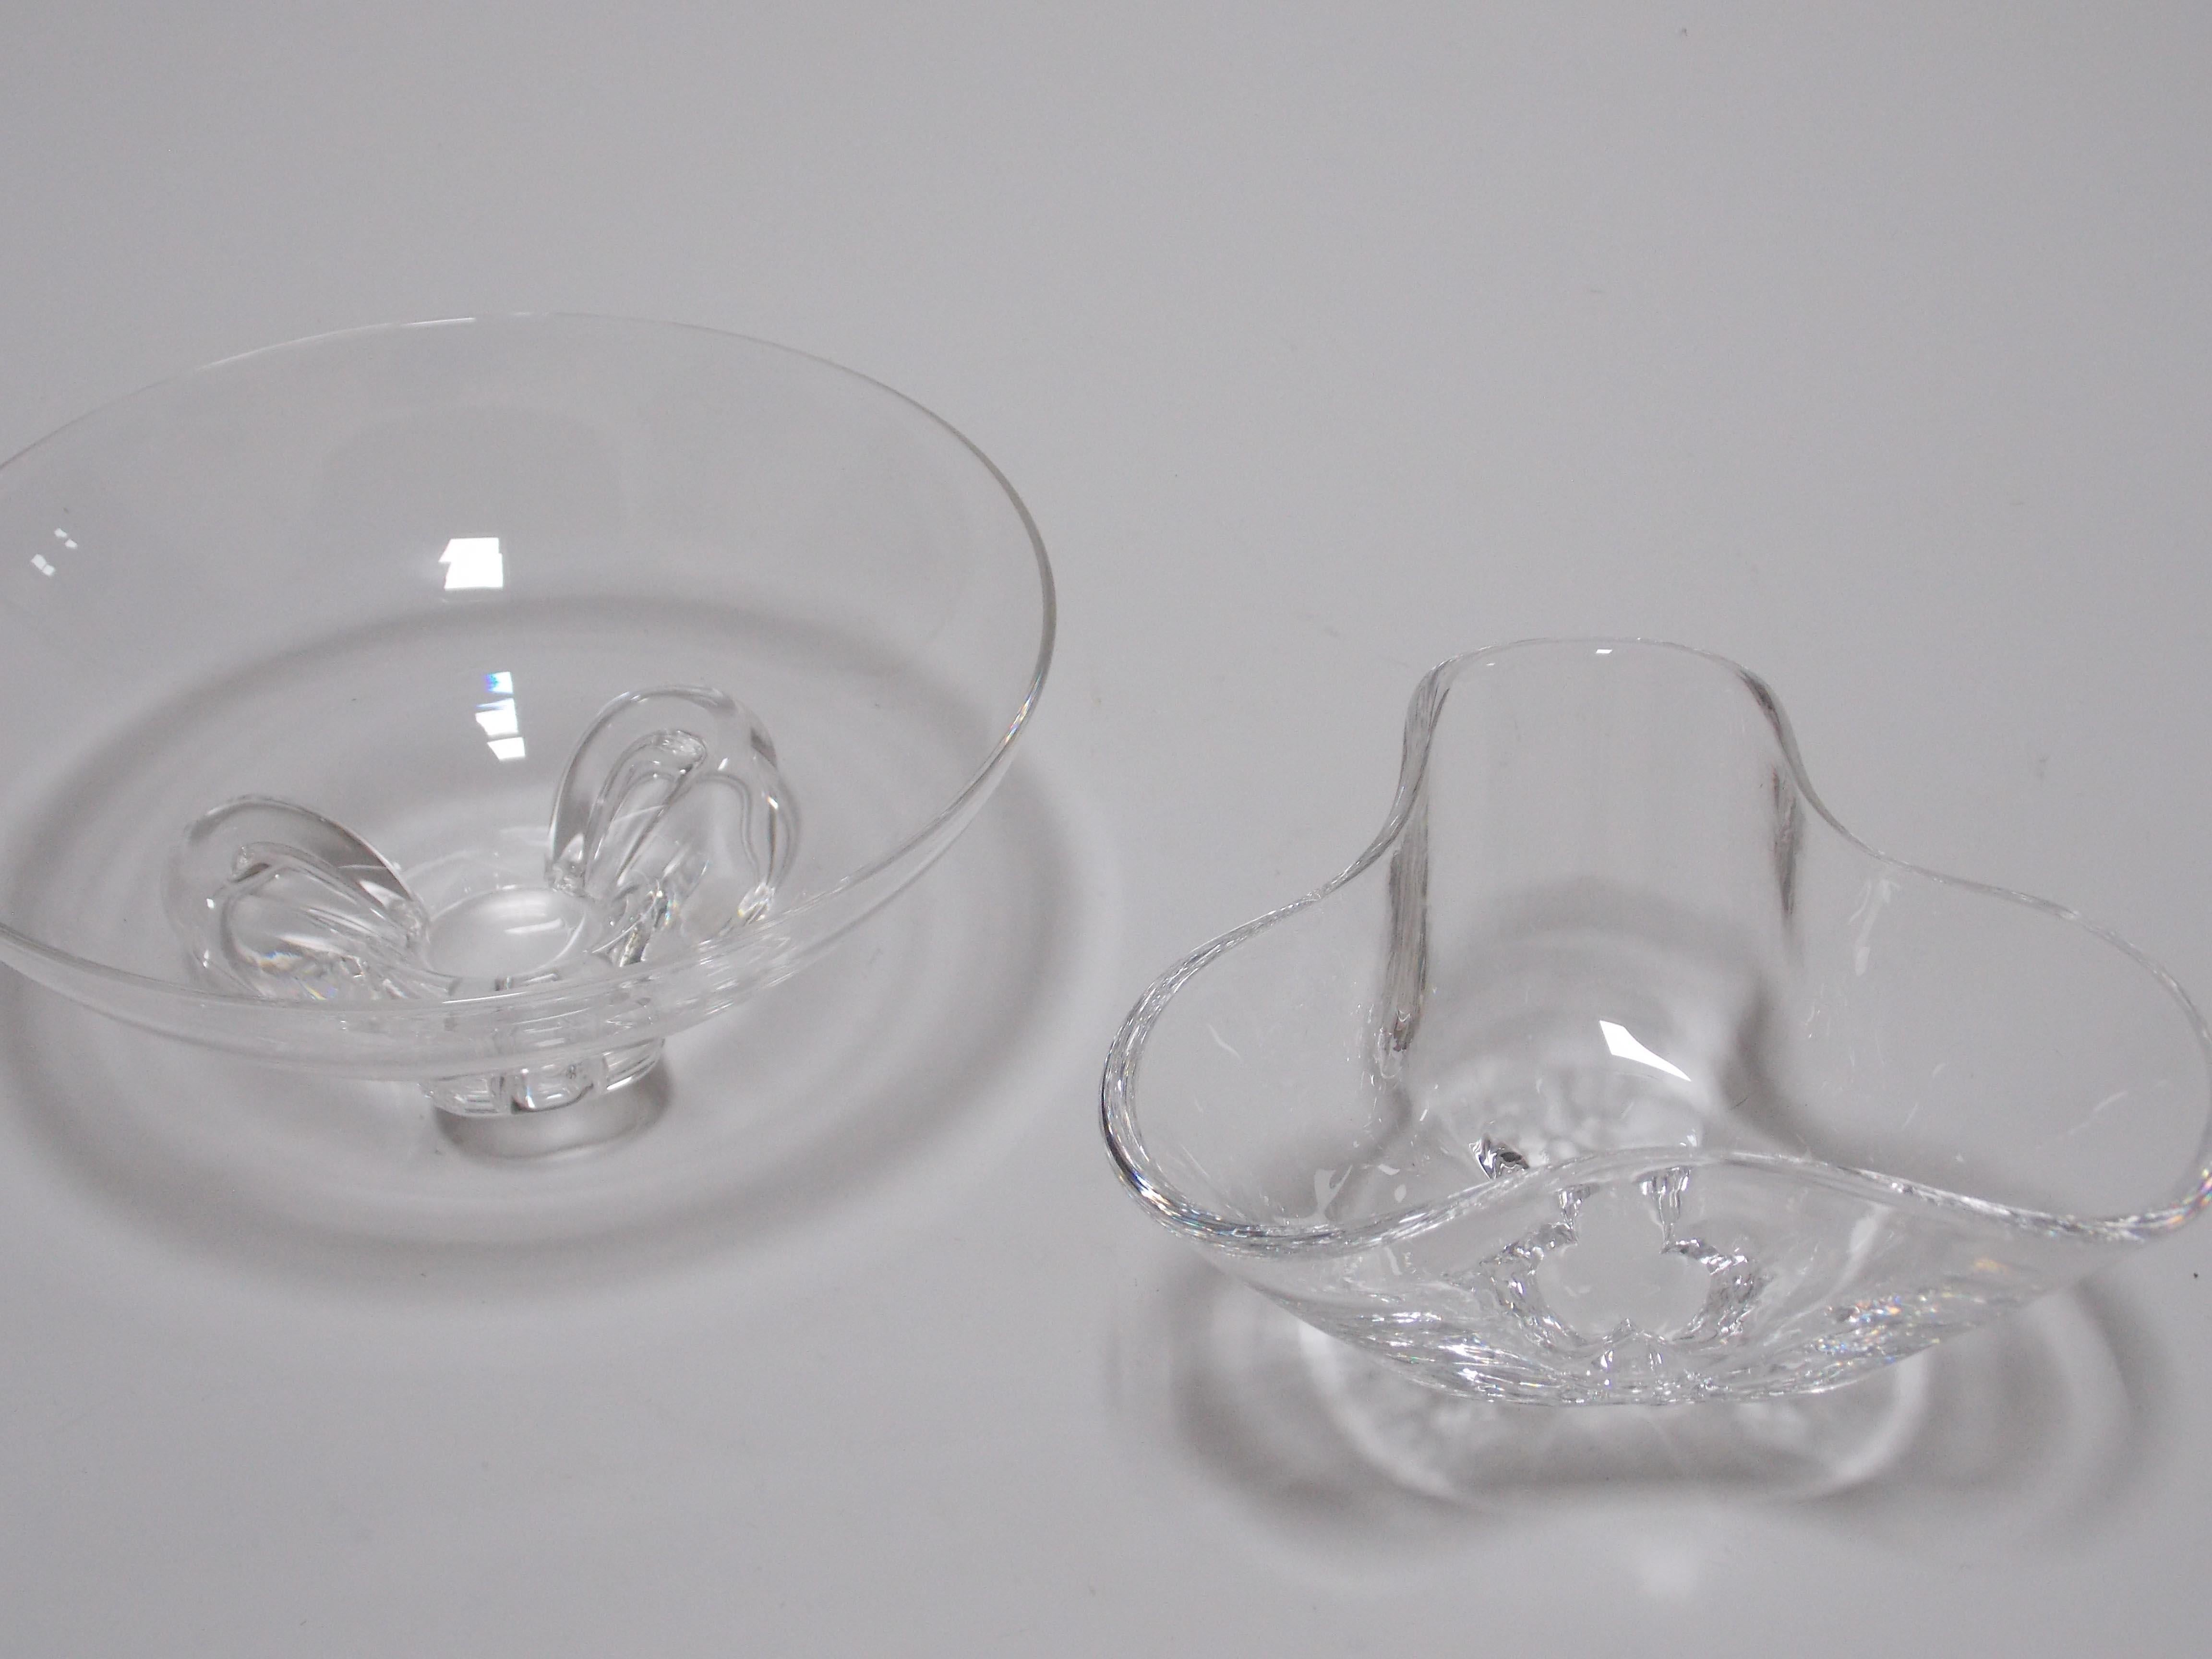 A pair of Steuben crystal bowls
Measures: Smaller bowl 3